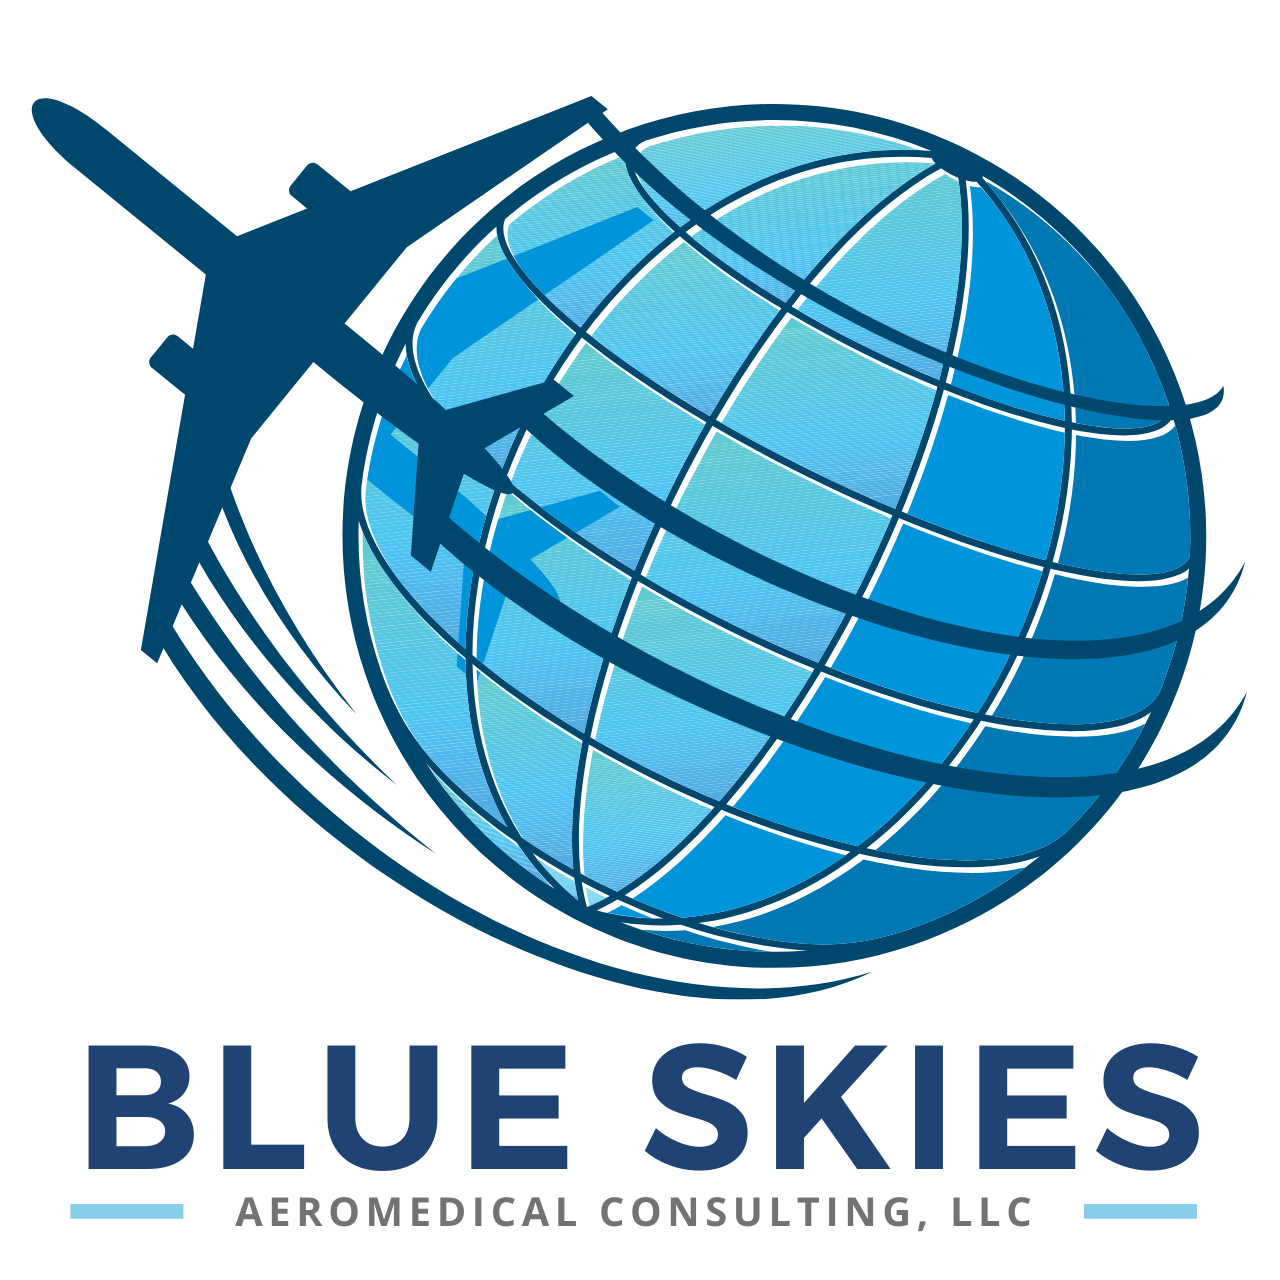 Blue Skies Aeromedical Consulting, LLC